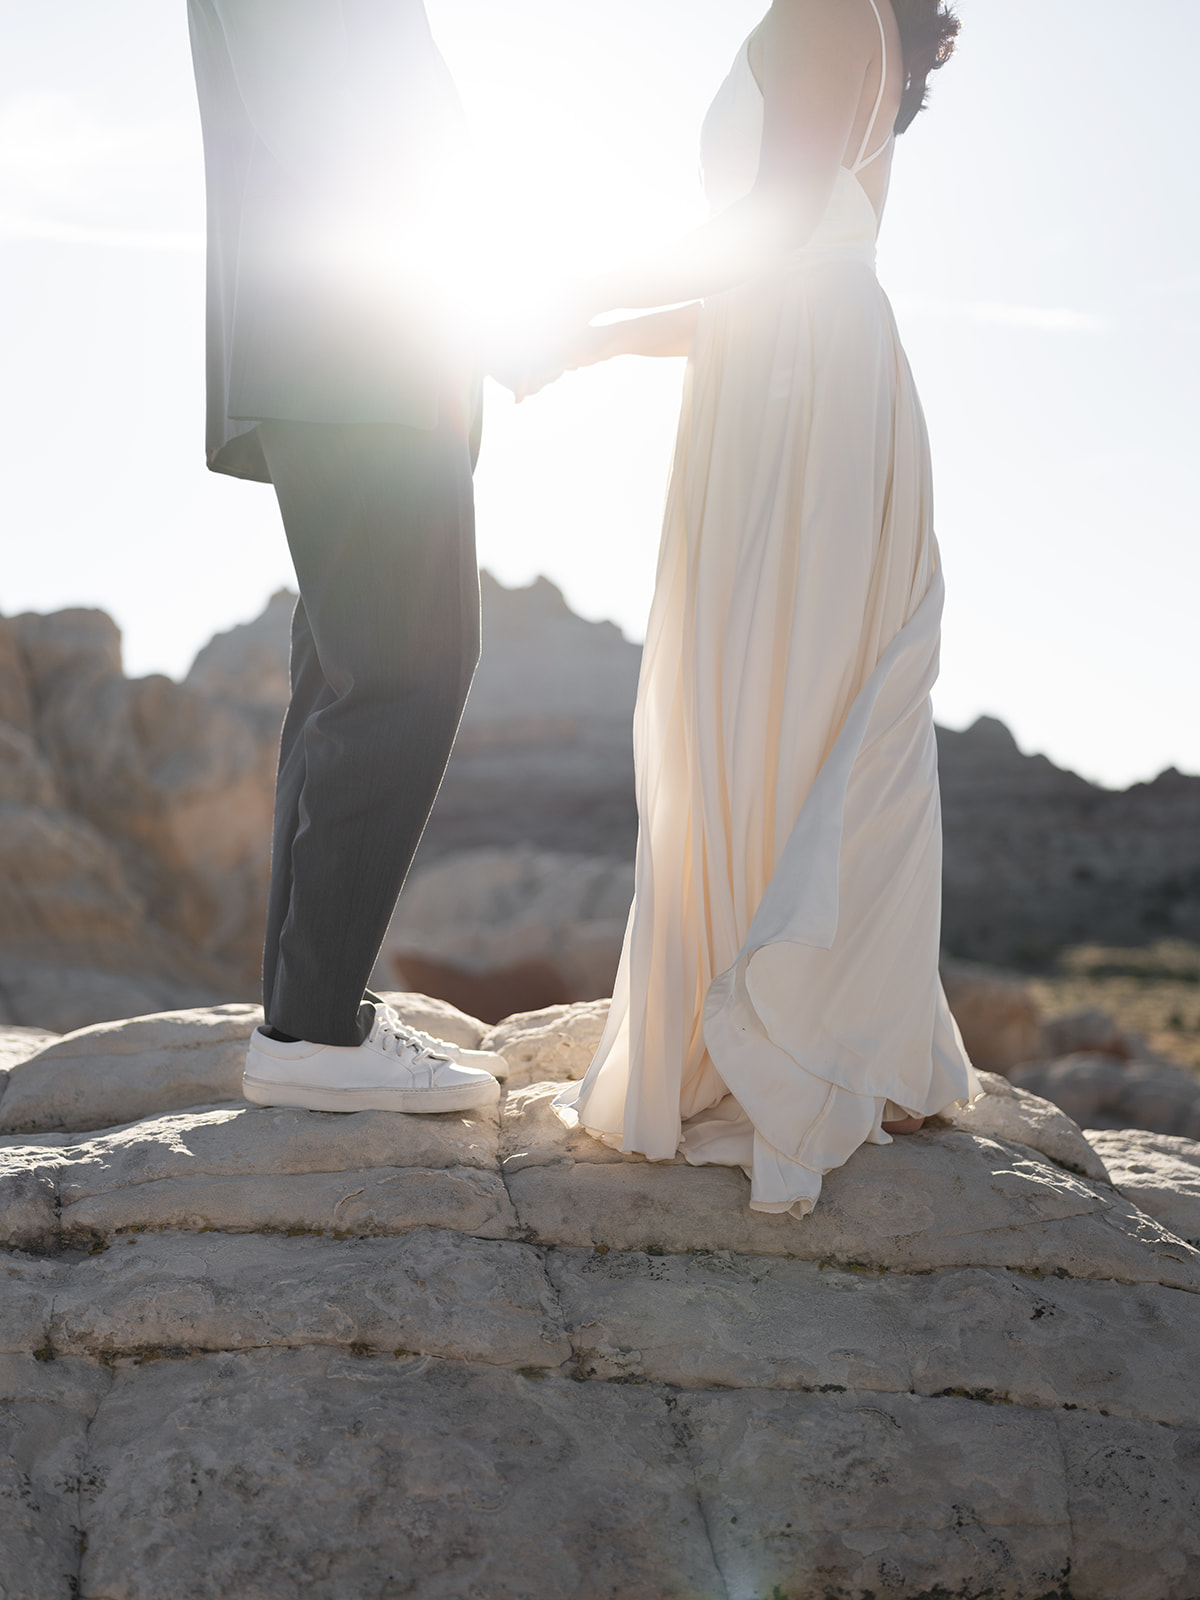 Couple exchanging vows at sunset during their elopement at White Pocket, Arizona